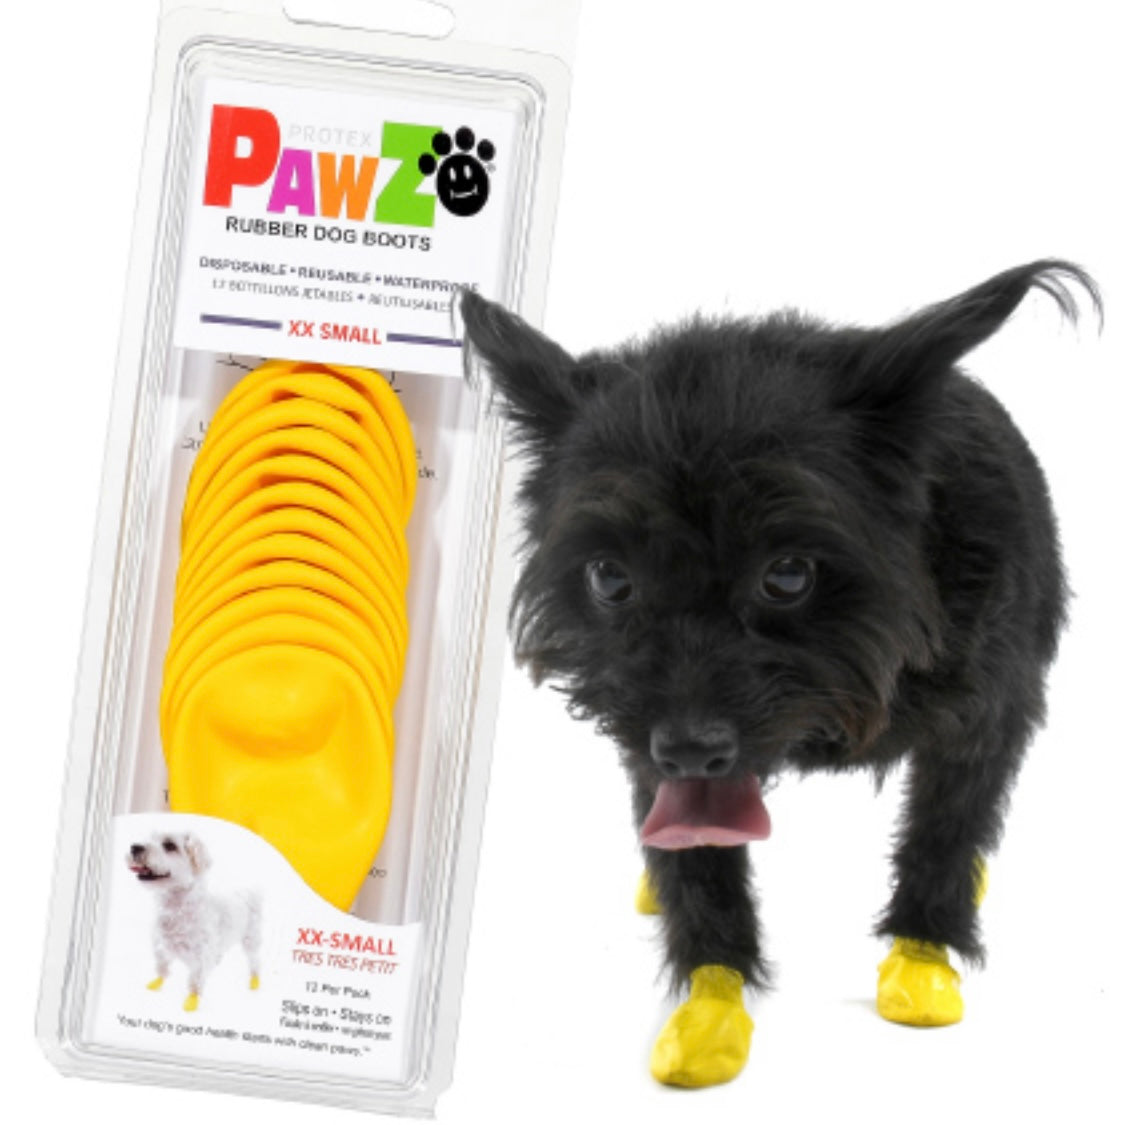 Pawz Dog Boots